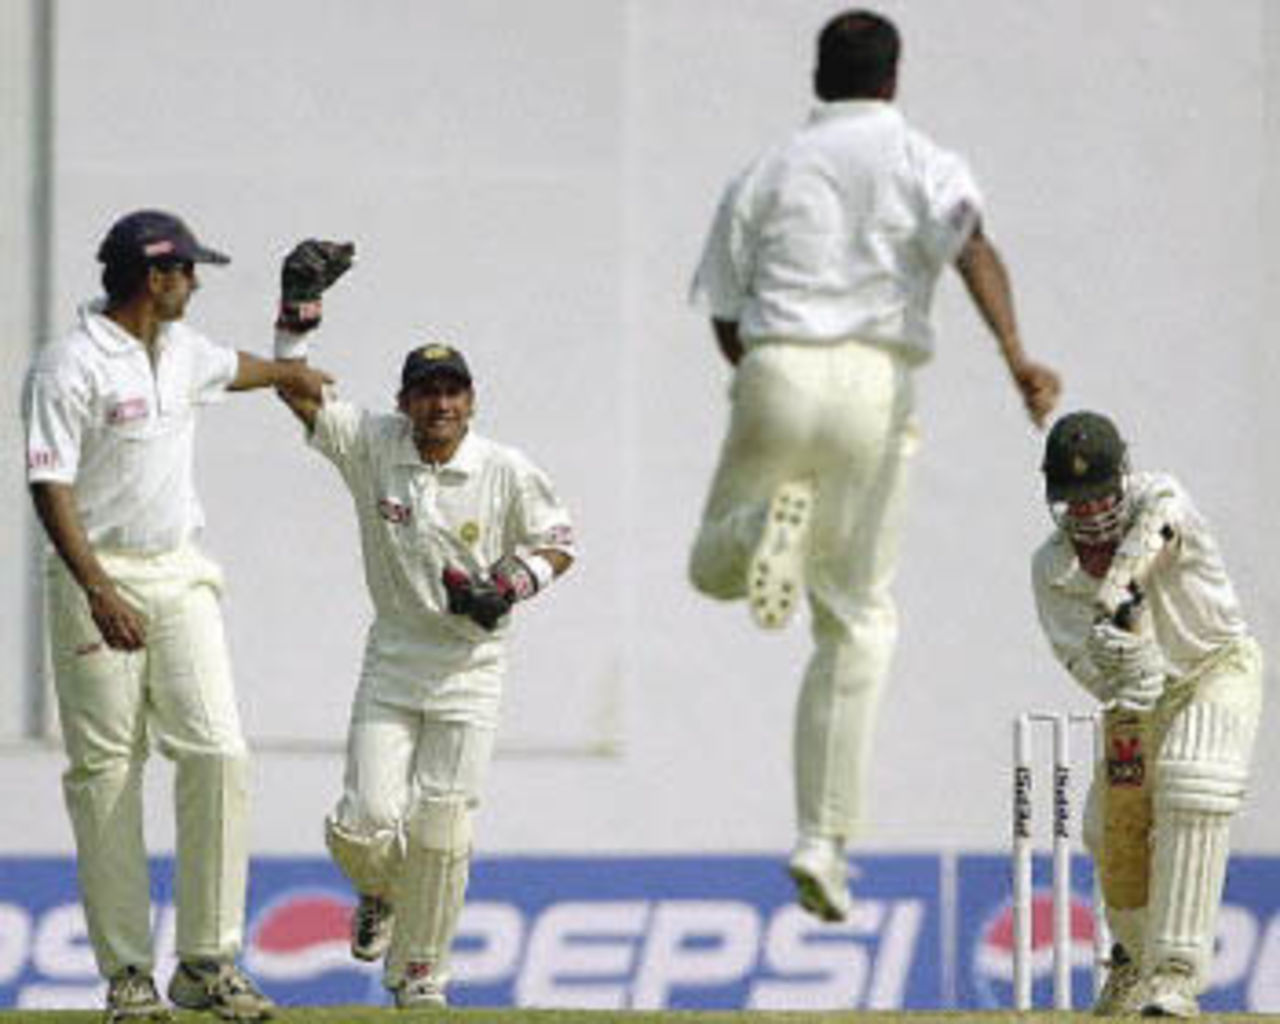 Joshi leaps in the air as he dismisses Grant Flower, Zimbabwe in India, 2000/01, 2nd Test, India v Zimbabwe, Vidarbha C.A. Ground, Nagpur, 25-29 November 2000 (Day 5).